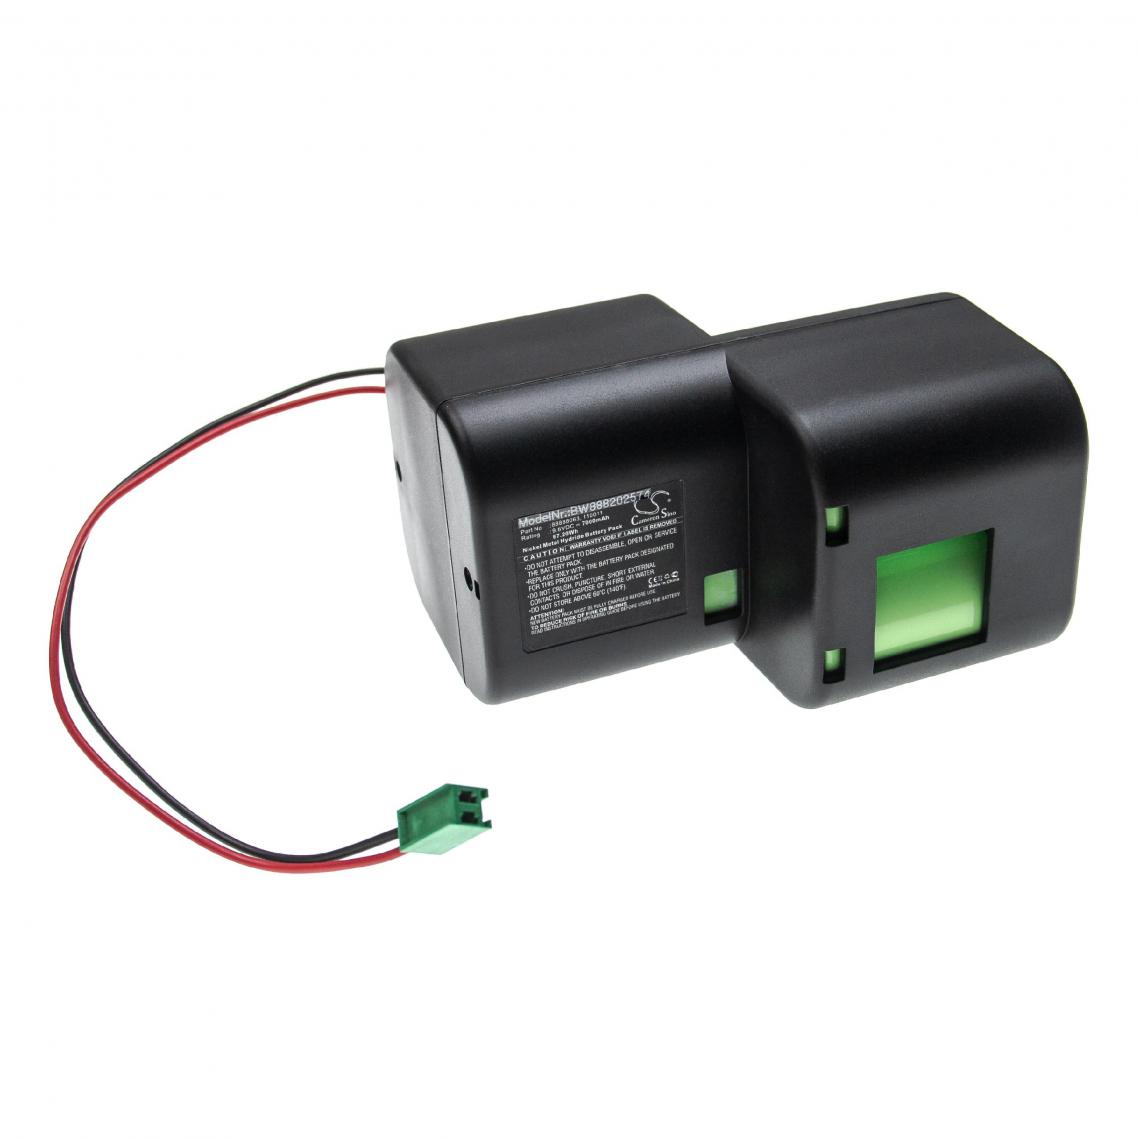 Vhbw - vhbw Batterie compatible avec B.Braun Dropmat Secura, Infusion pump Infusomat Secura appareil médical (7000mAh, 9,6V, NiMH) - Piles spécifiques